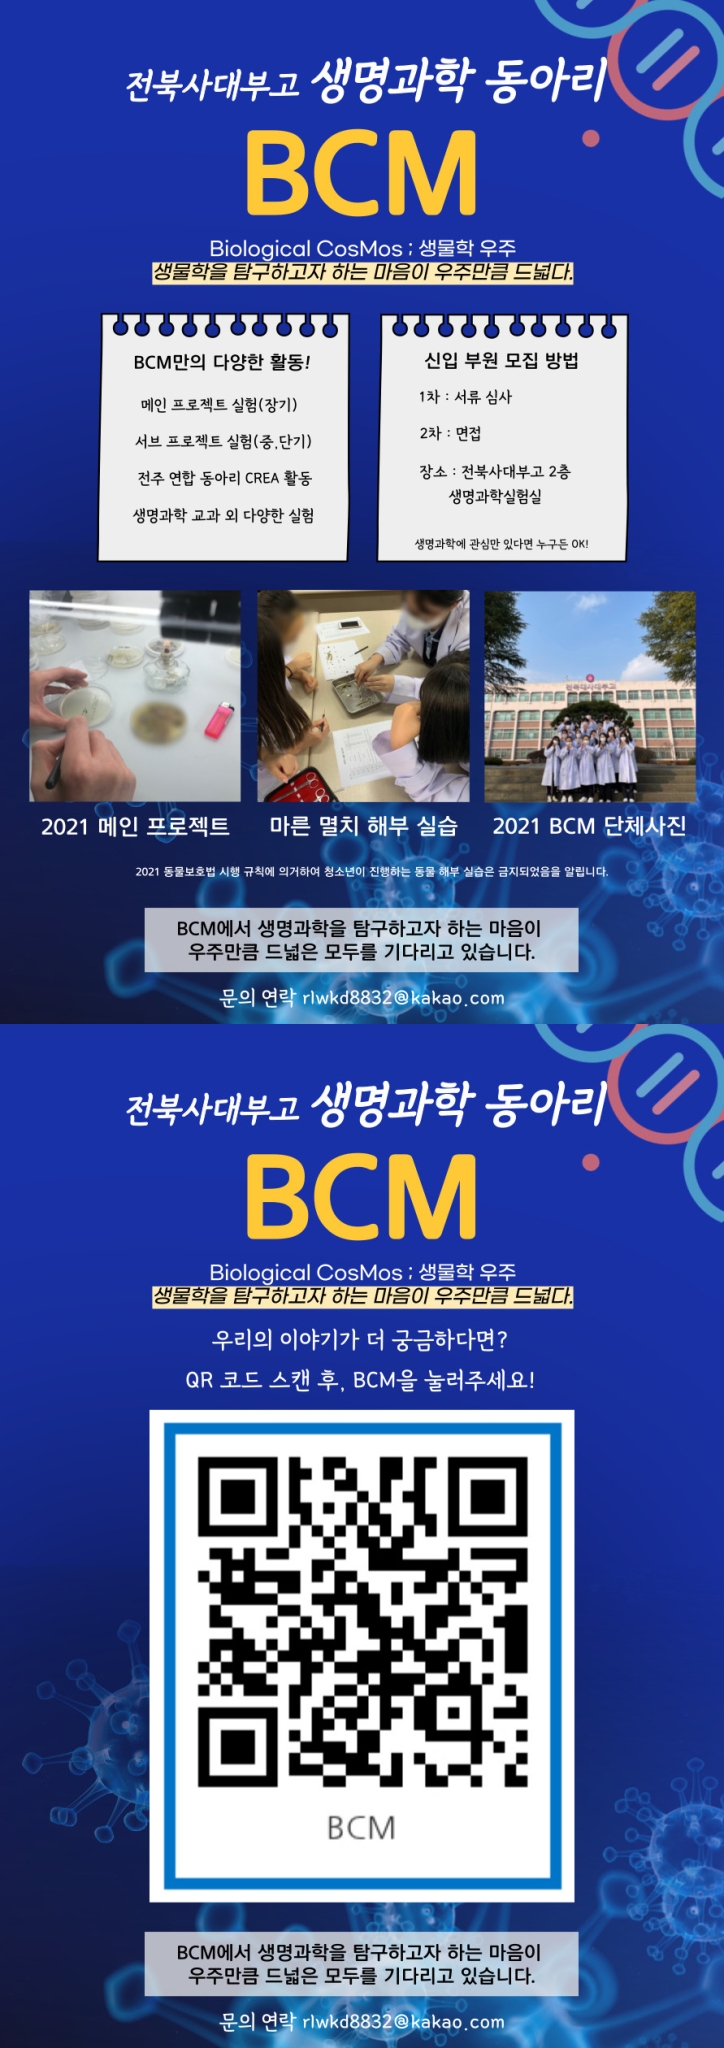 BCM 홍보 포스터